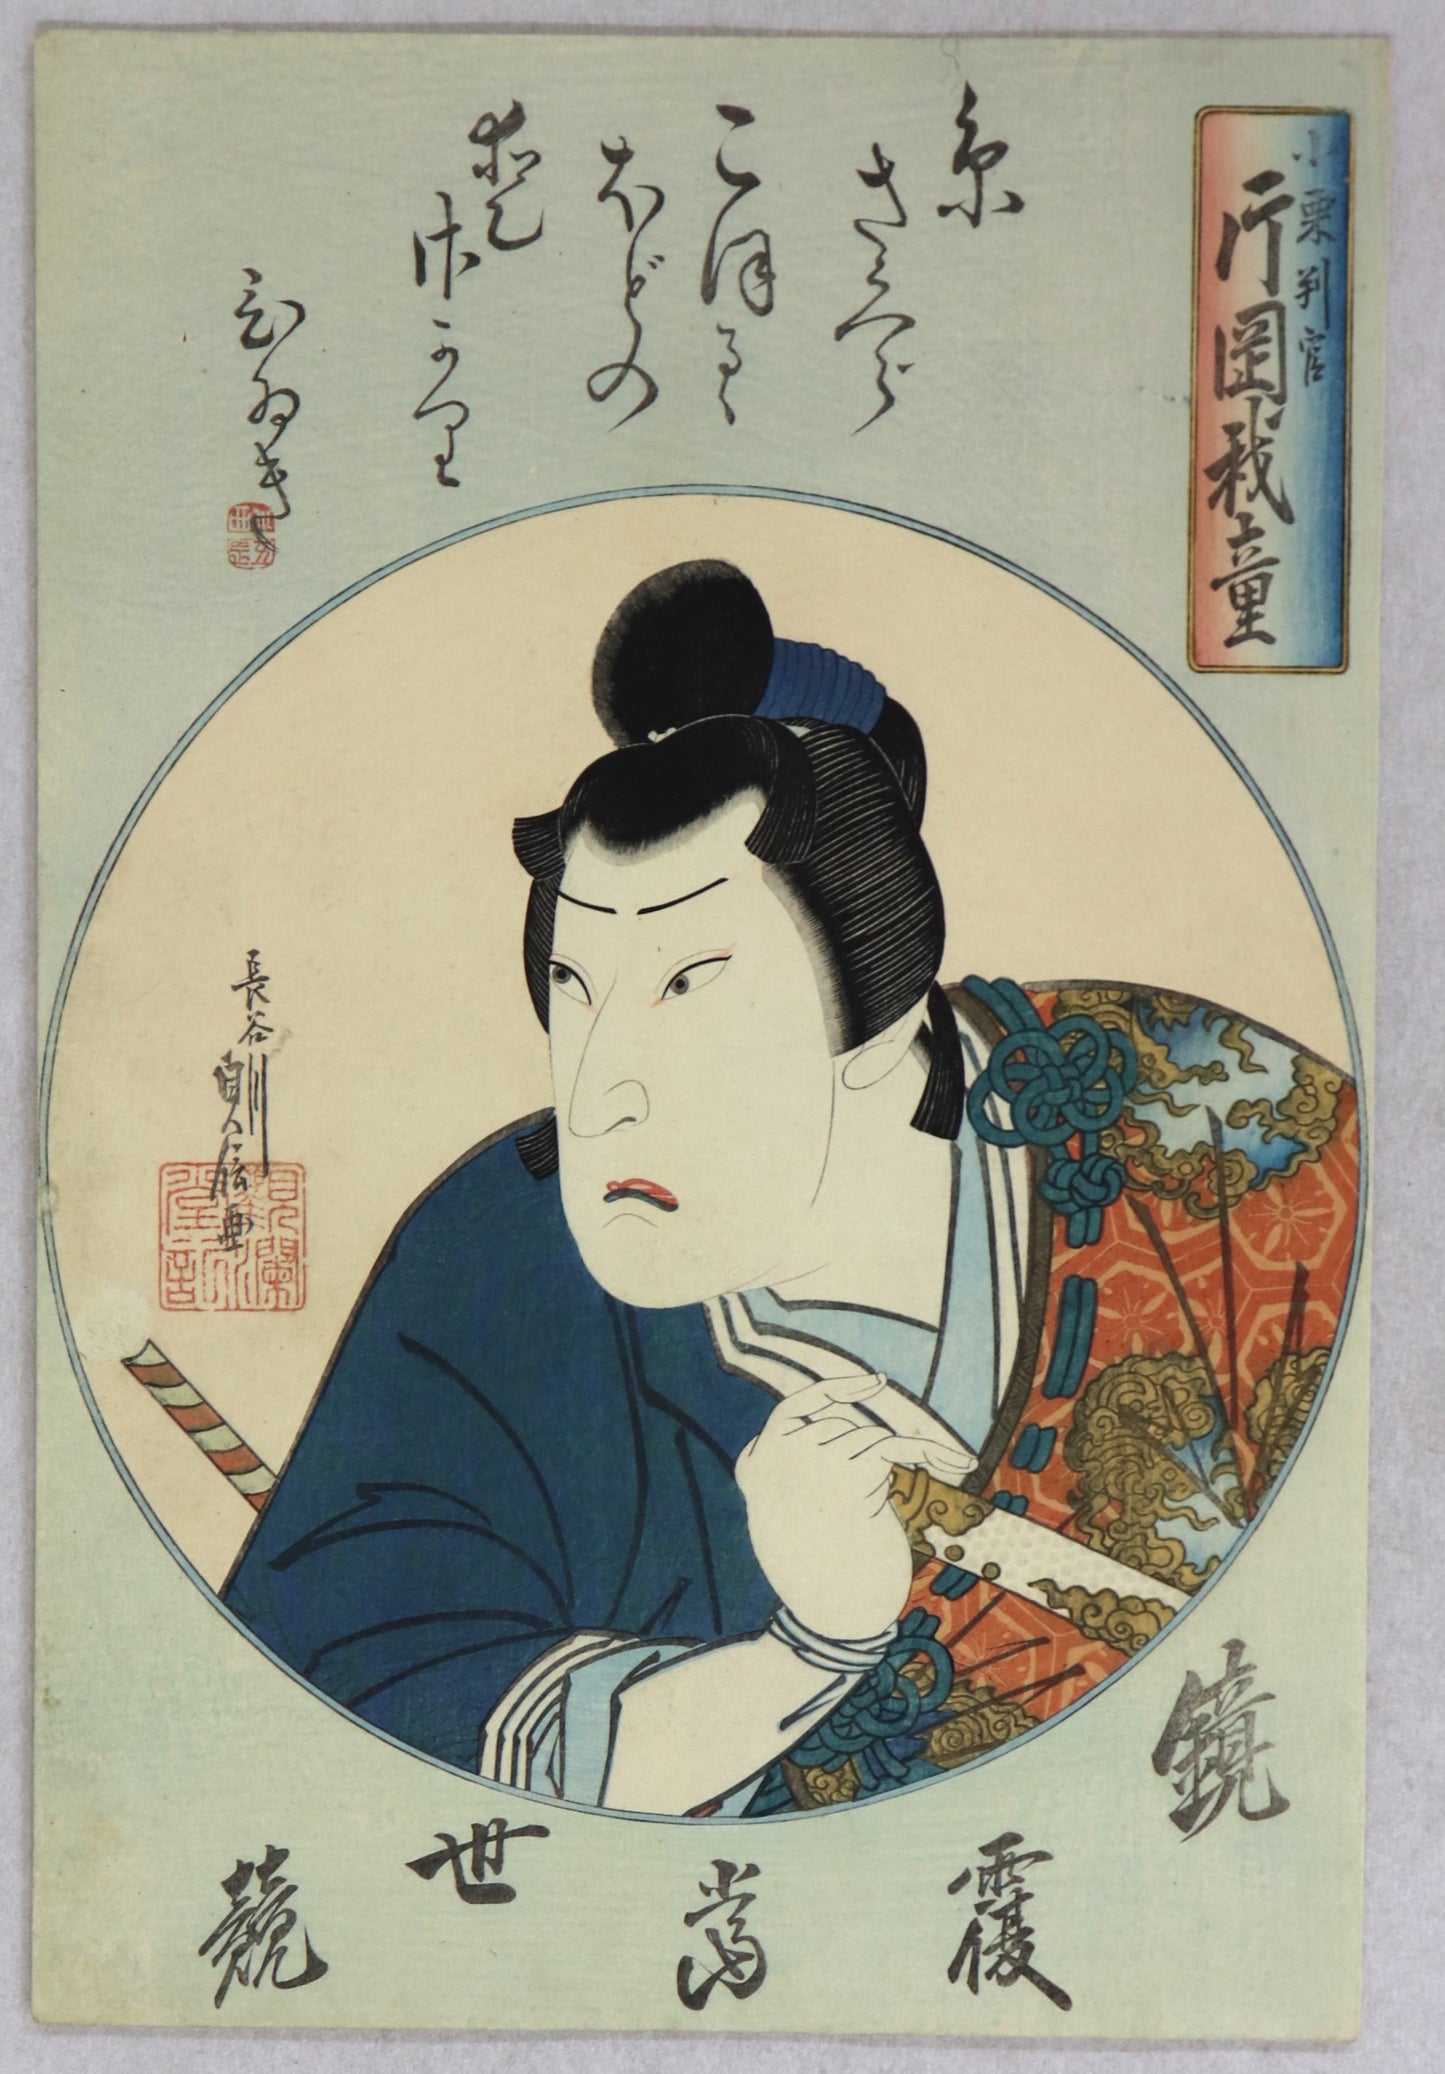 Kataoka Gado II as Oguri Hangan by Sadanobu / Kataoka Gado II dans le le rôle d'Oguri Hangan par Sadanobu I ( 1840)